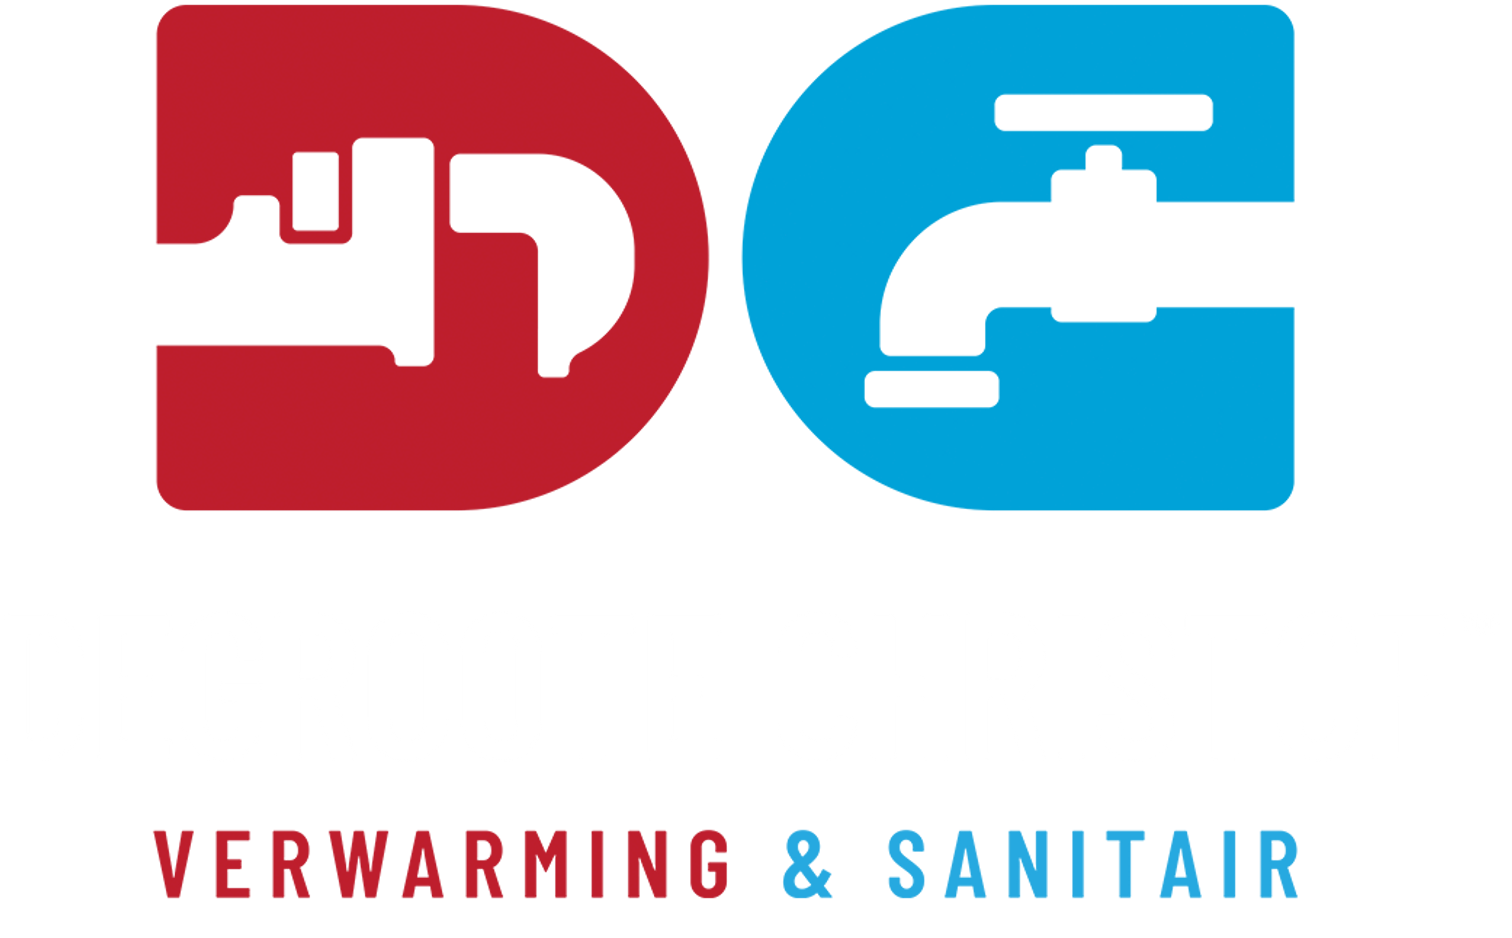 Degroote Christof VOF logo